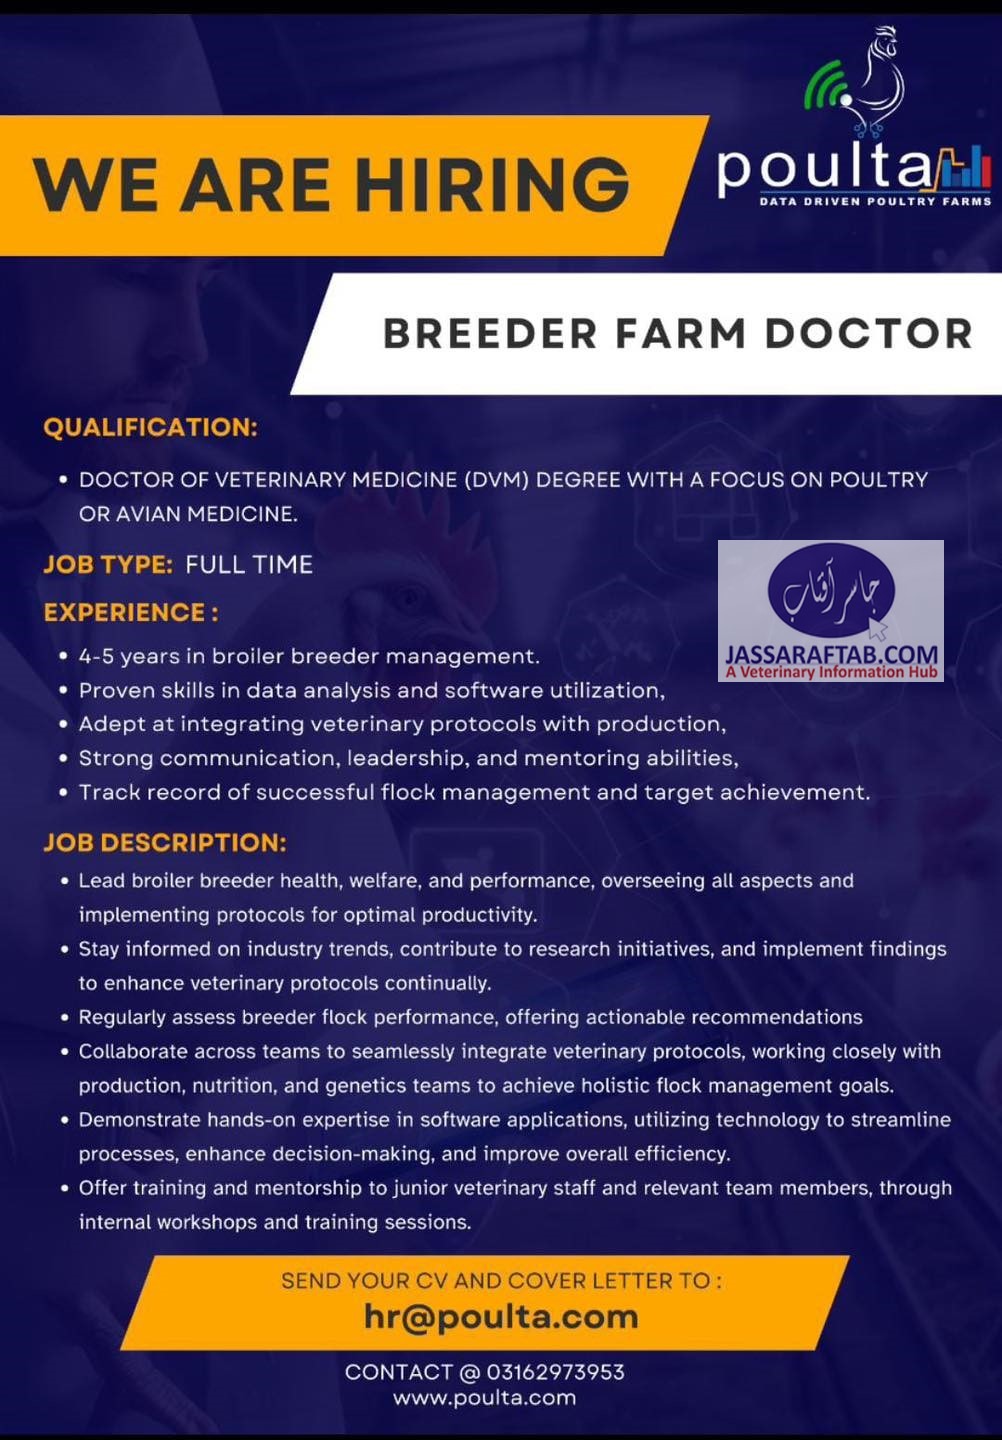 Poultry Farm Jobs as Breeder Farm Doctor Job